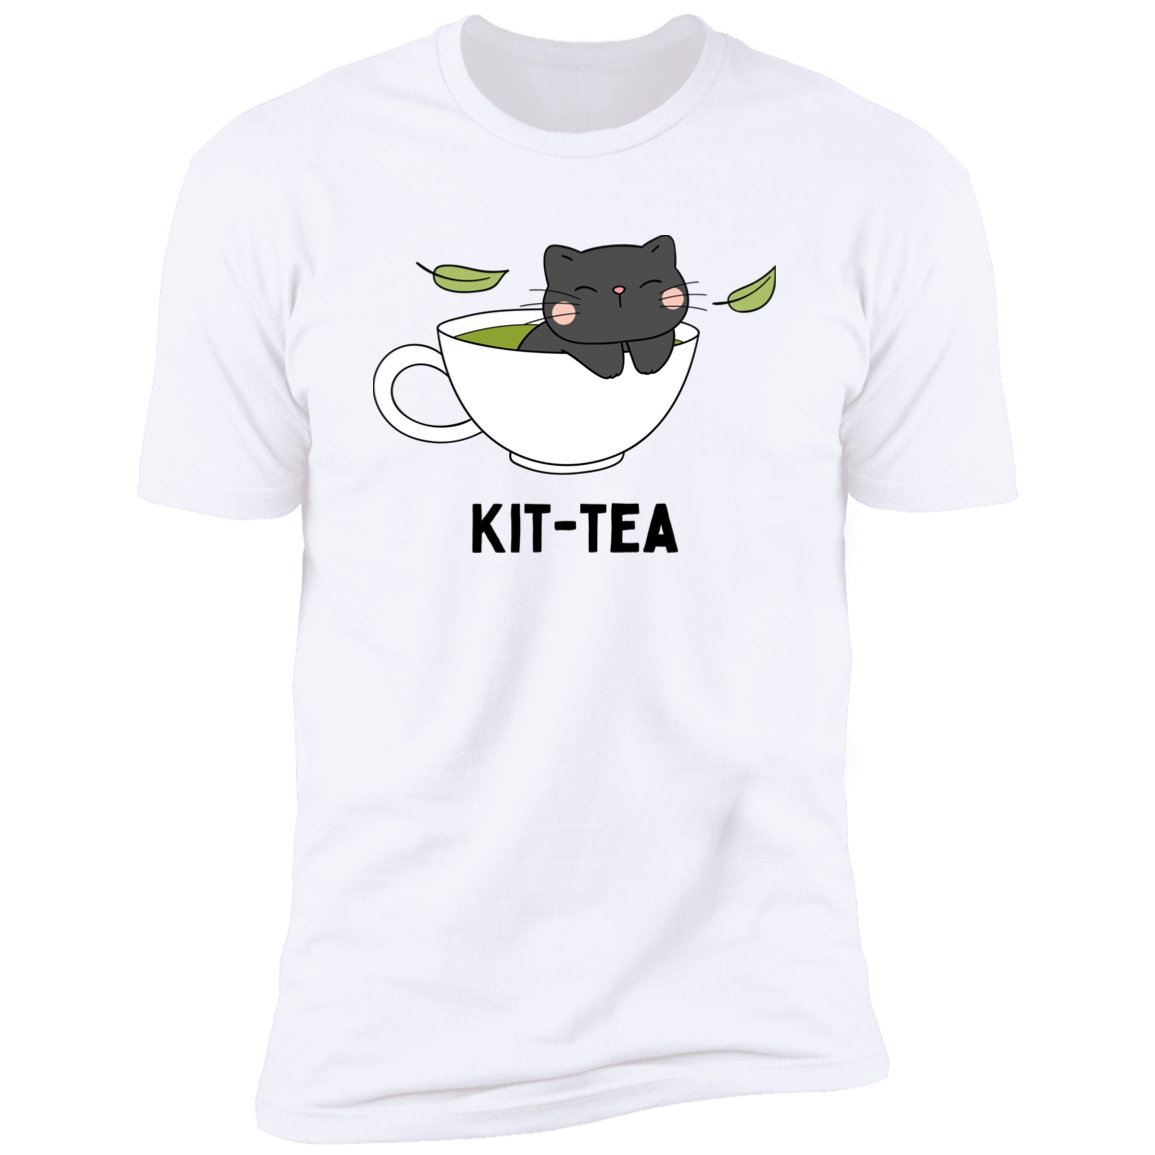 Kitt-Tea T-Shirt, kitty tea shirt, Cat Shirt for humans, funny cat shirt, in white